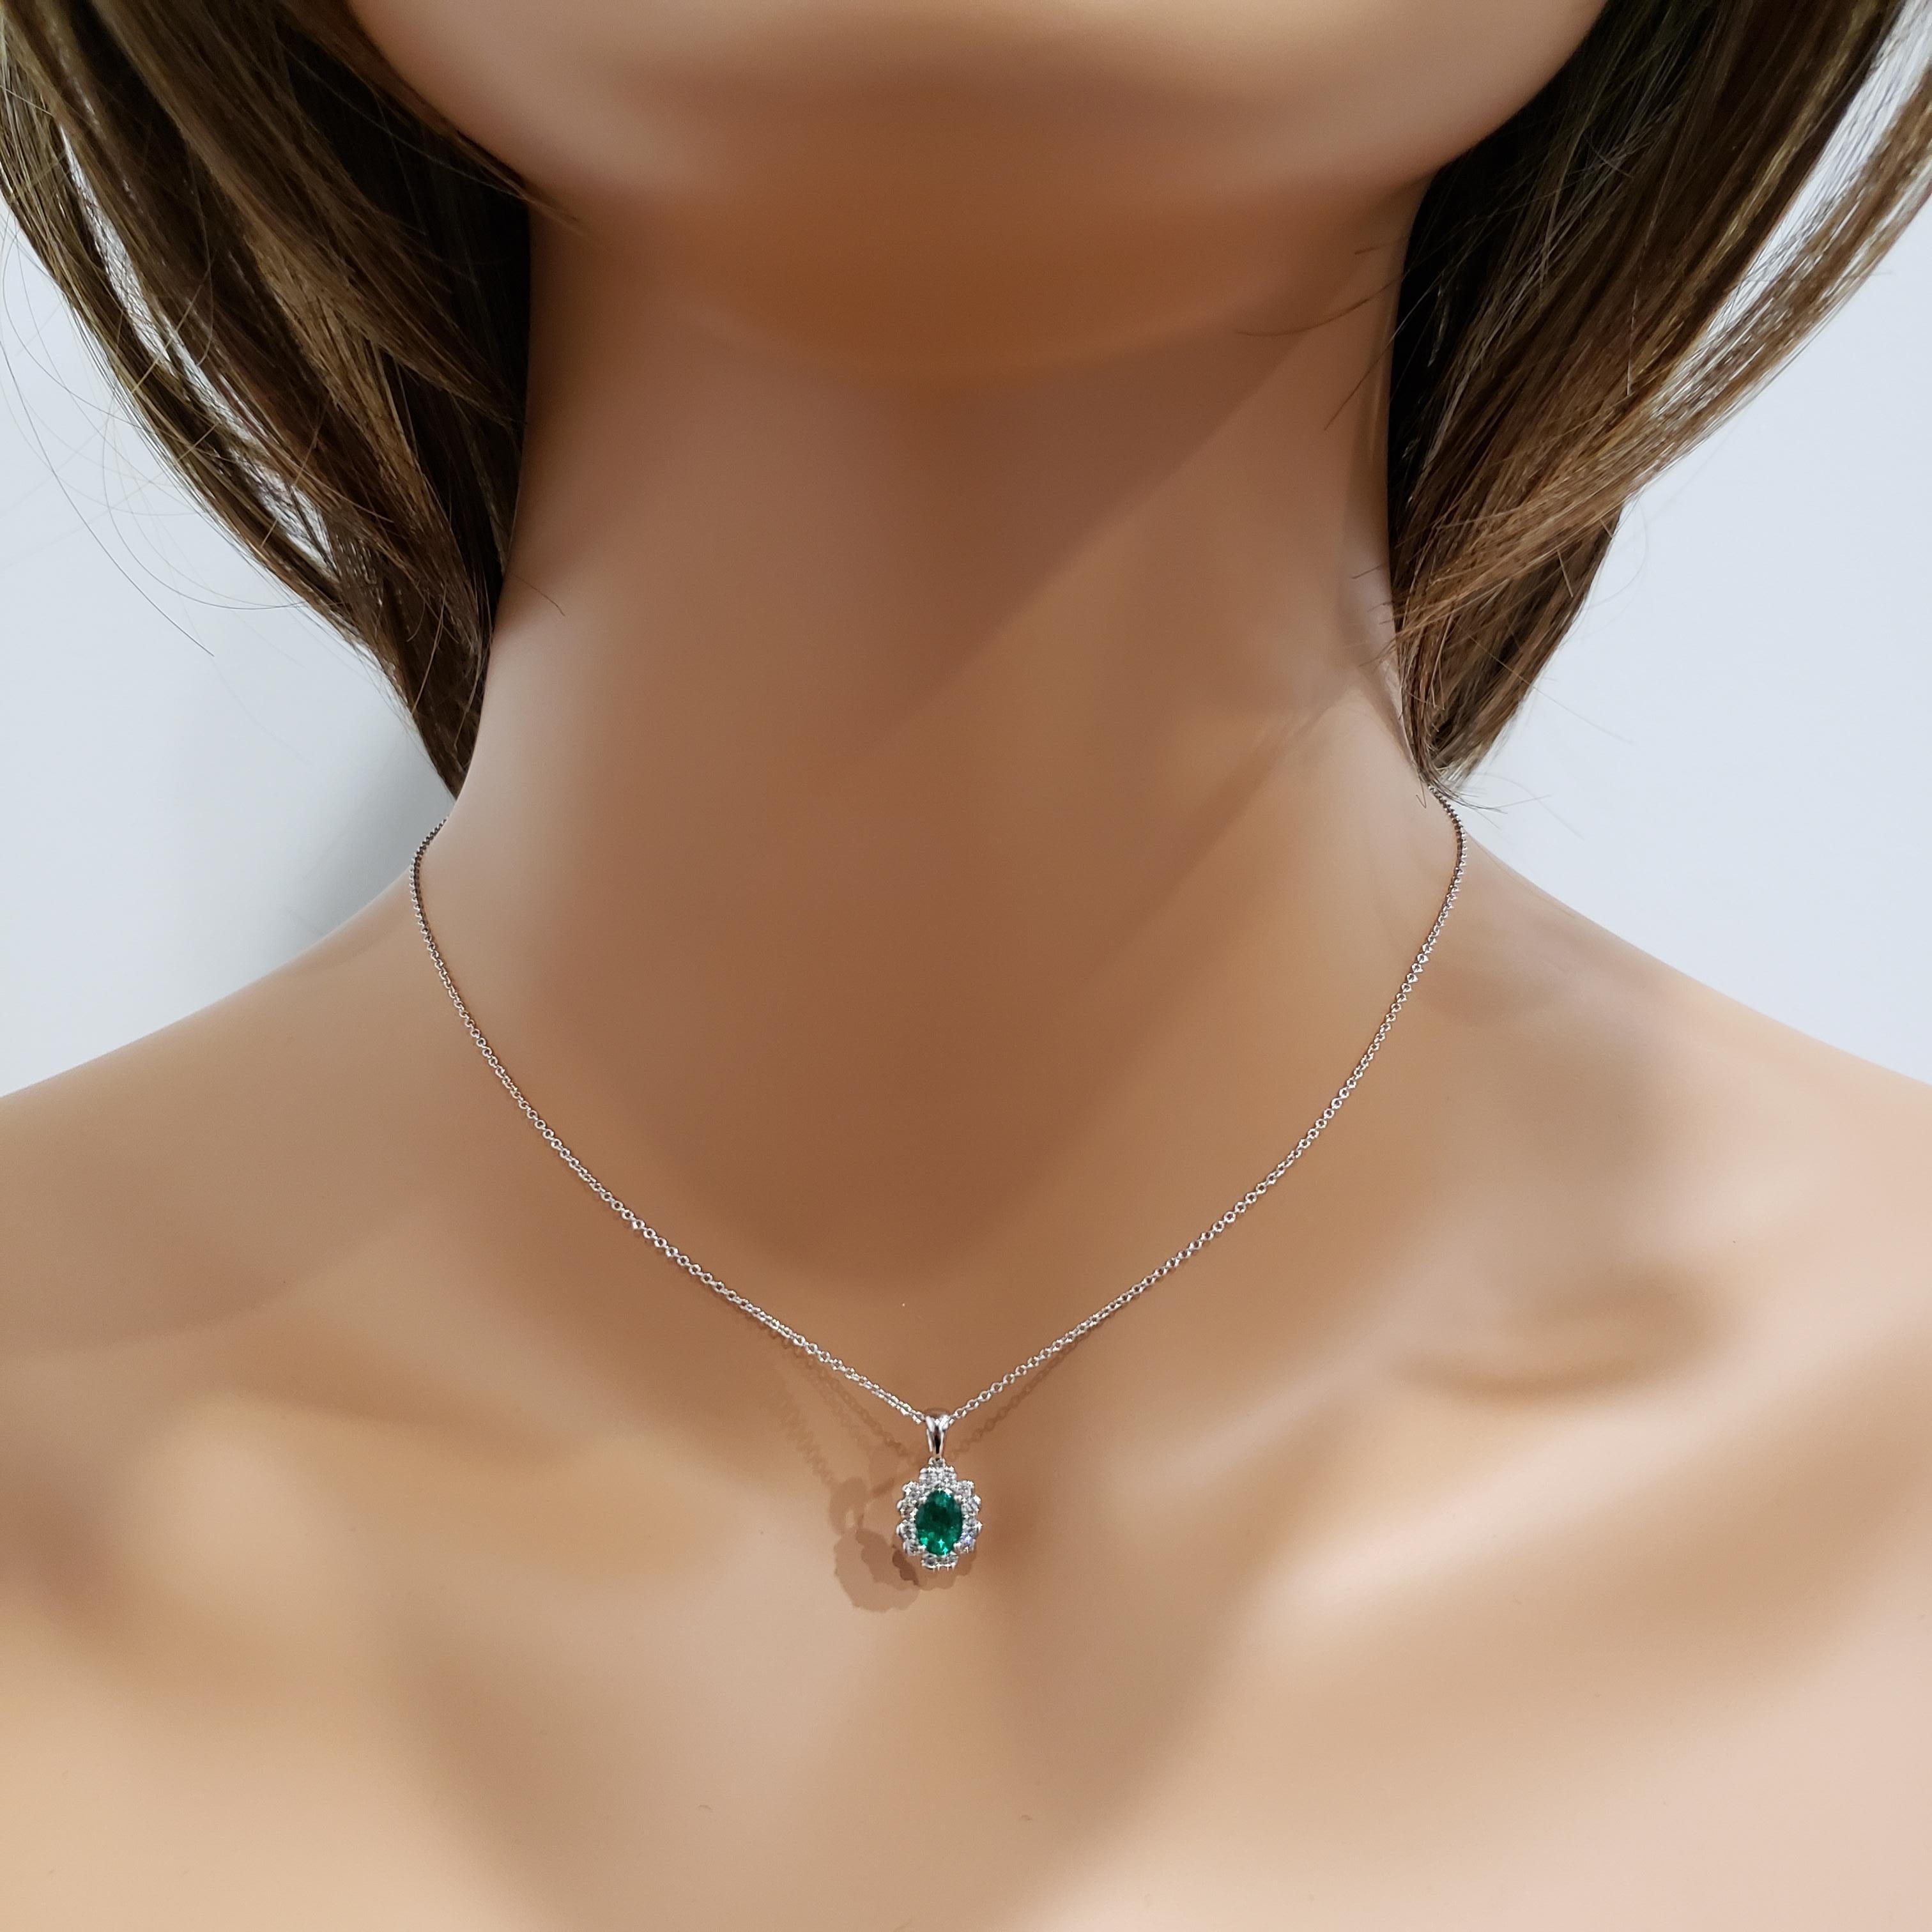 Roman Malakov 0.71 Carat Oval Cut Green Emerald and Diamond Pendant Necklace For Sale 1